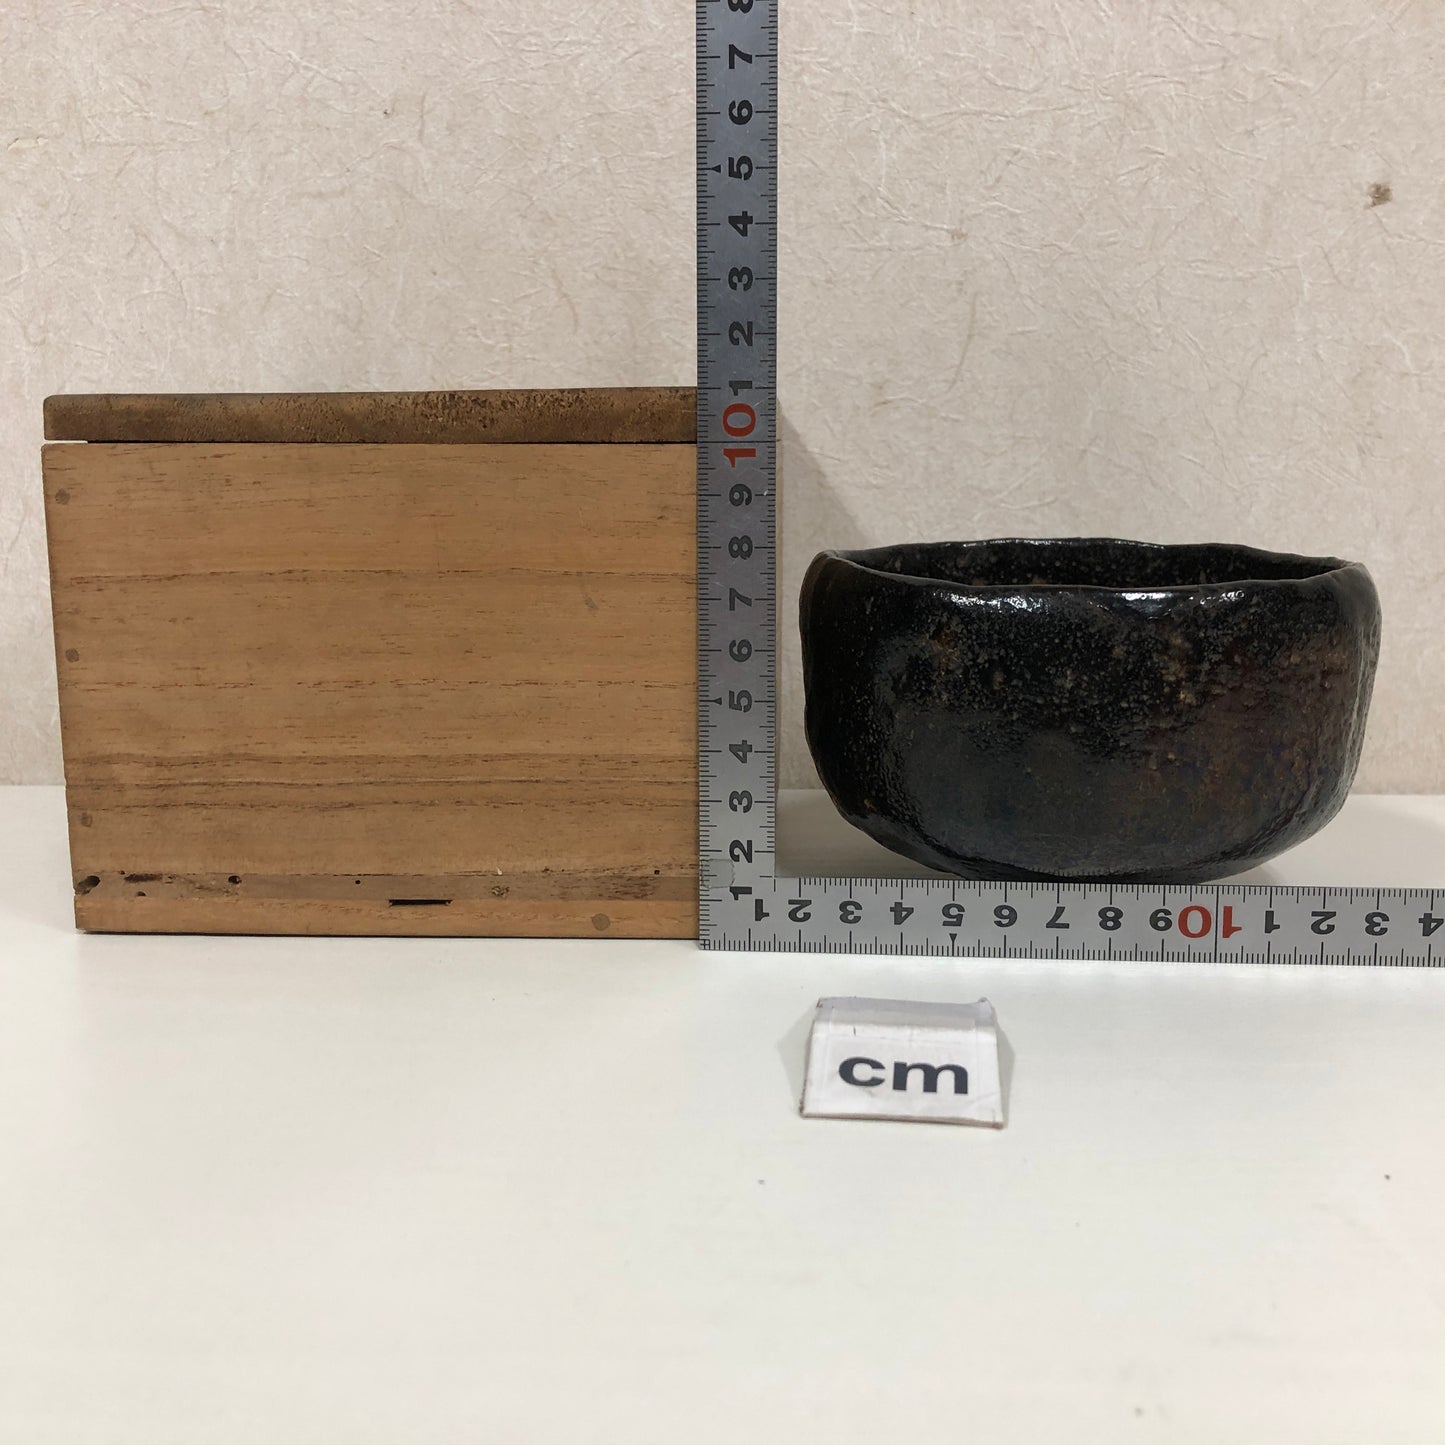 Y4040 CHAWAN Raku-ware Black box kintsugi Japan antique tea cremony pottery